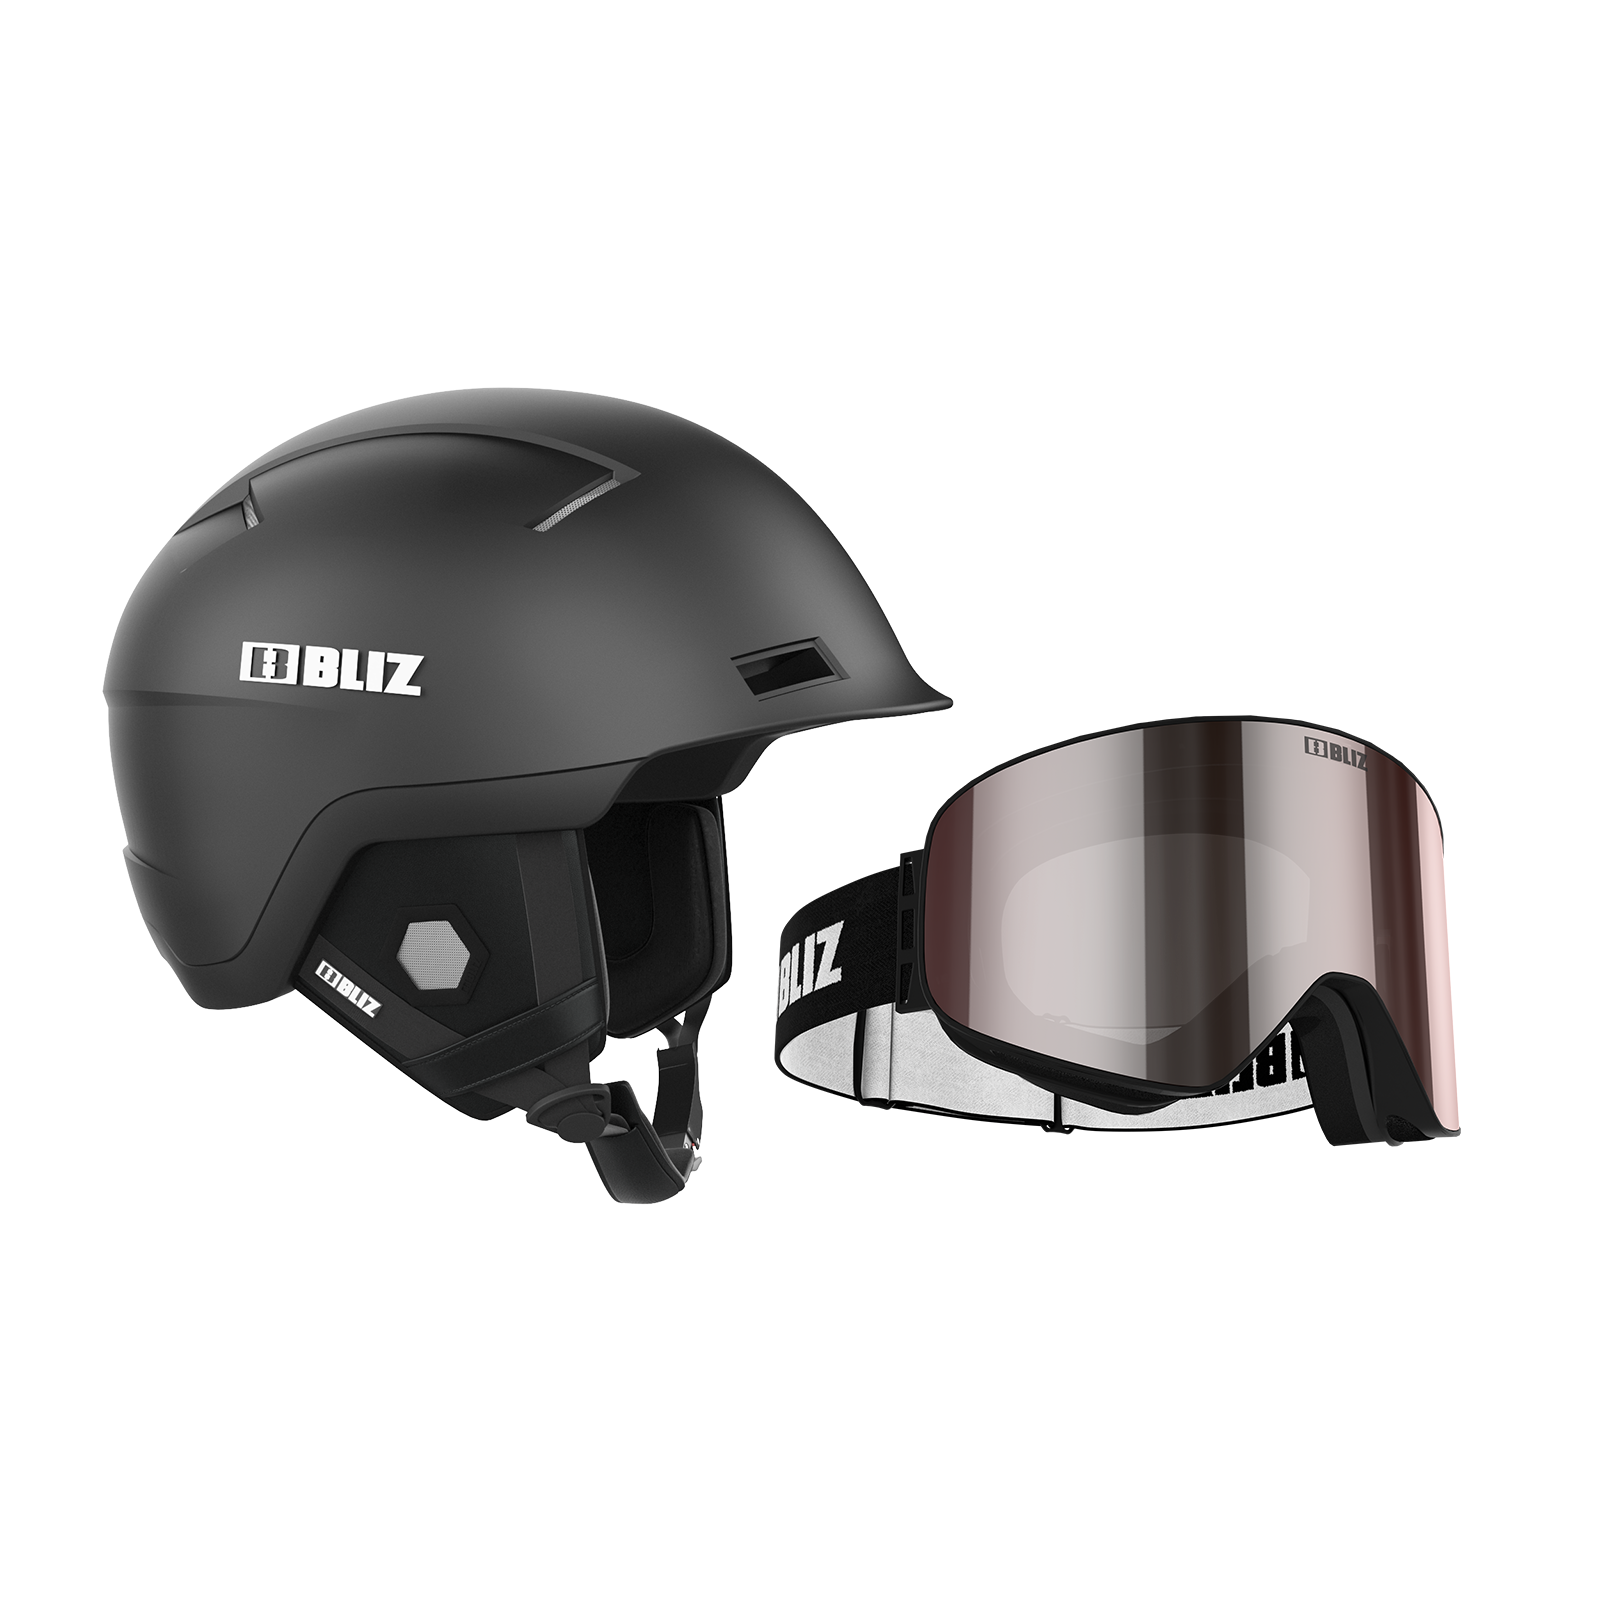  Cască Ski  -  bliz Bliz Helmet / Goggle Package